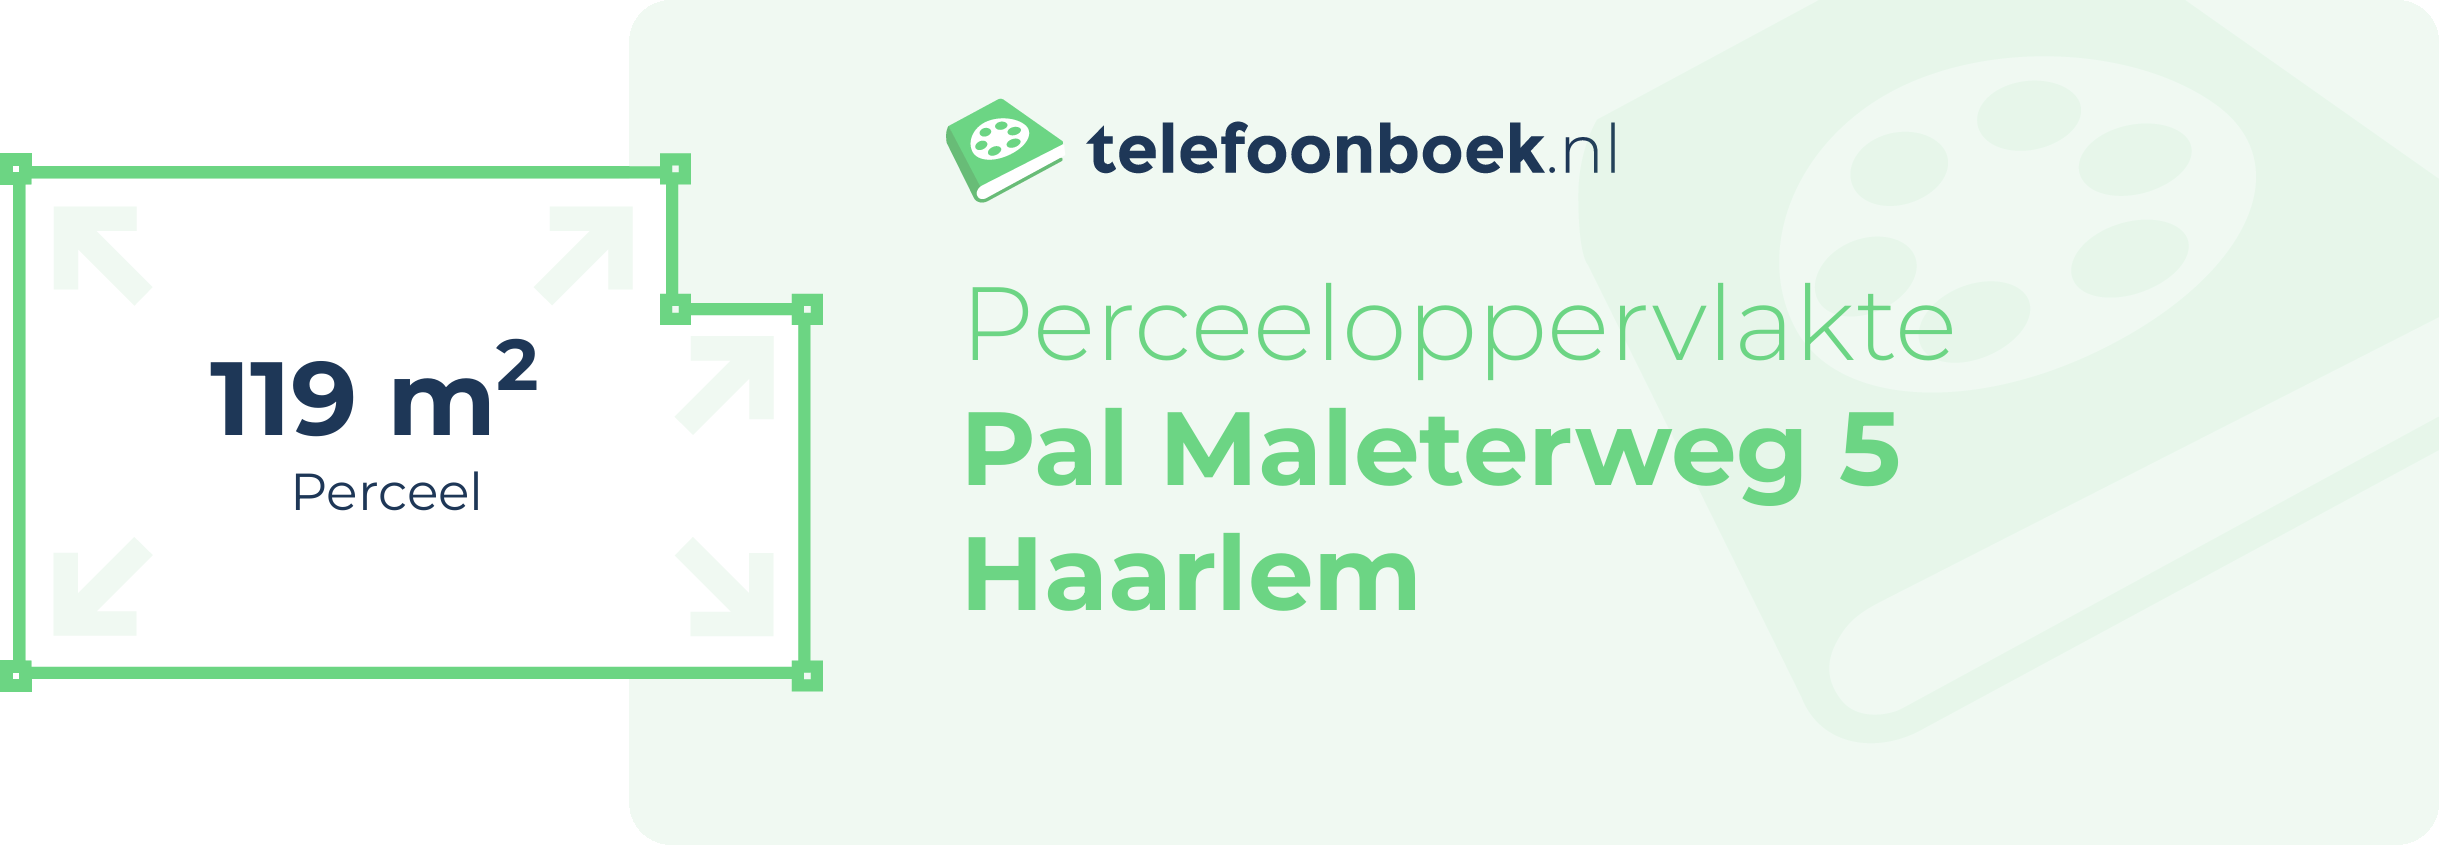 Perceeloppervlakte Pal Maleterweg 5 Haarlem